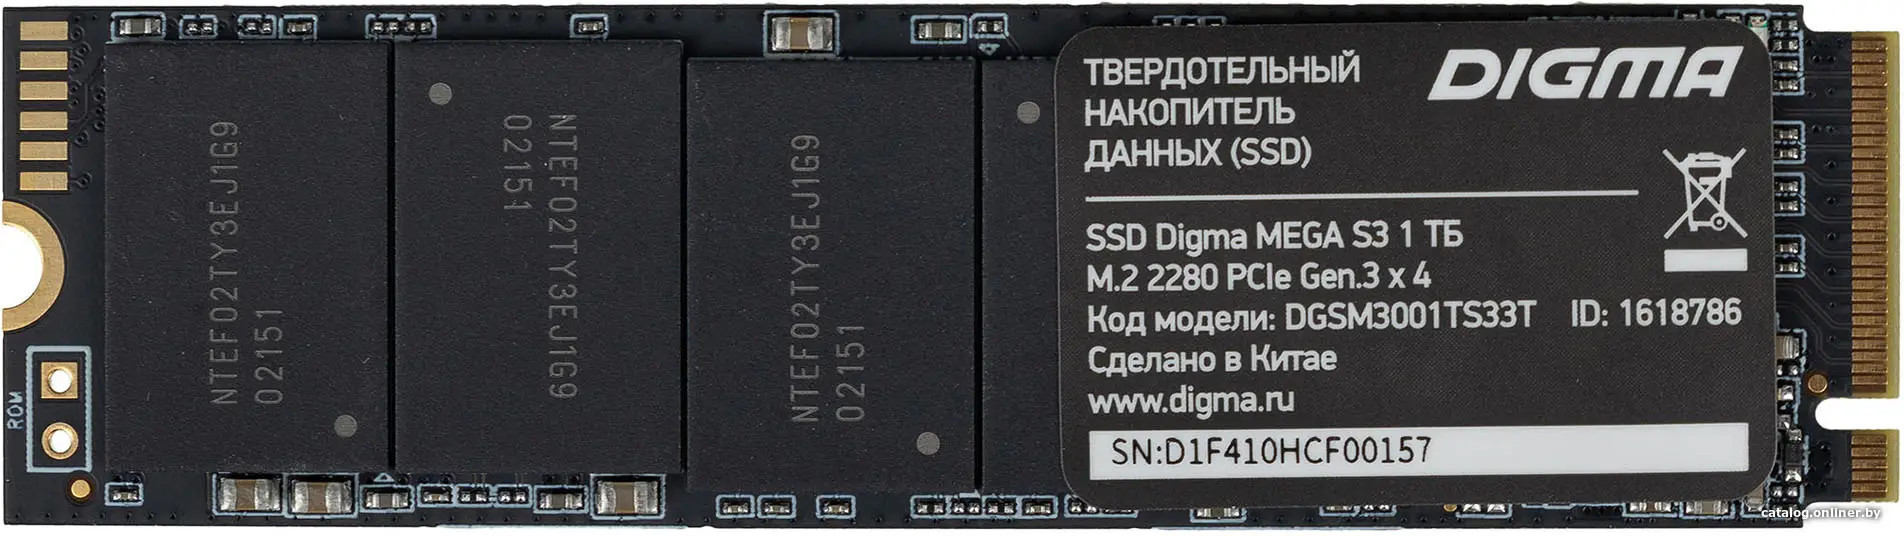 Купить SSD диск Digma Mega S3 1TB (DGSM3001TS33T), цена, опт и розница